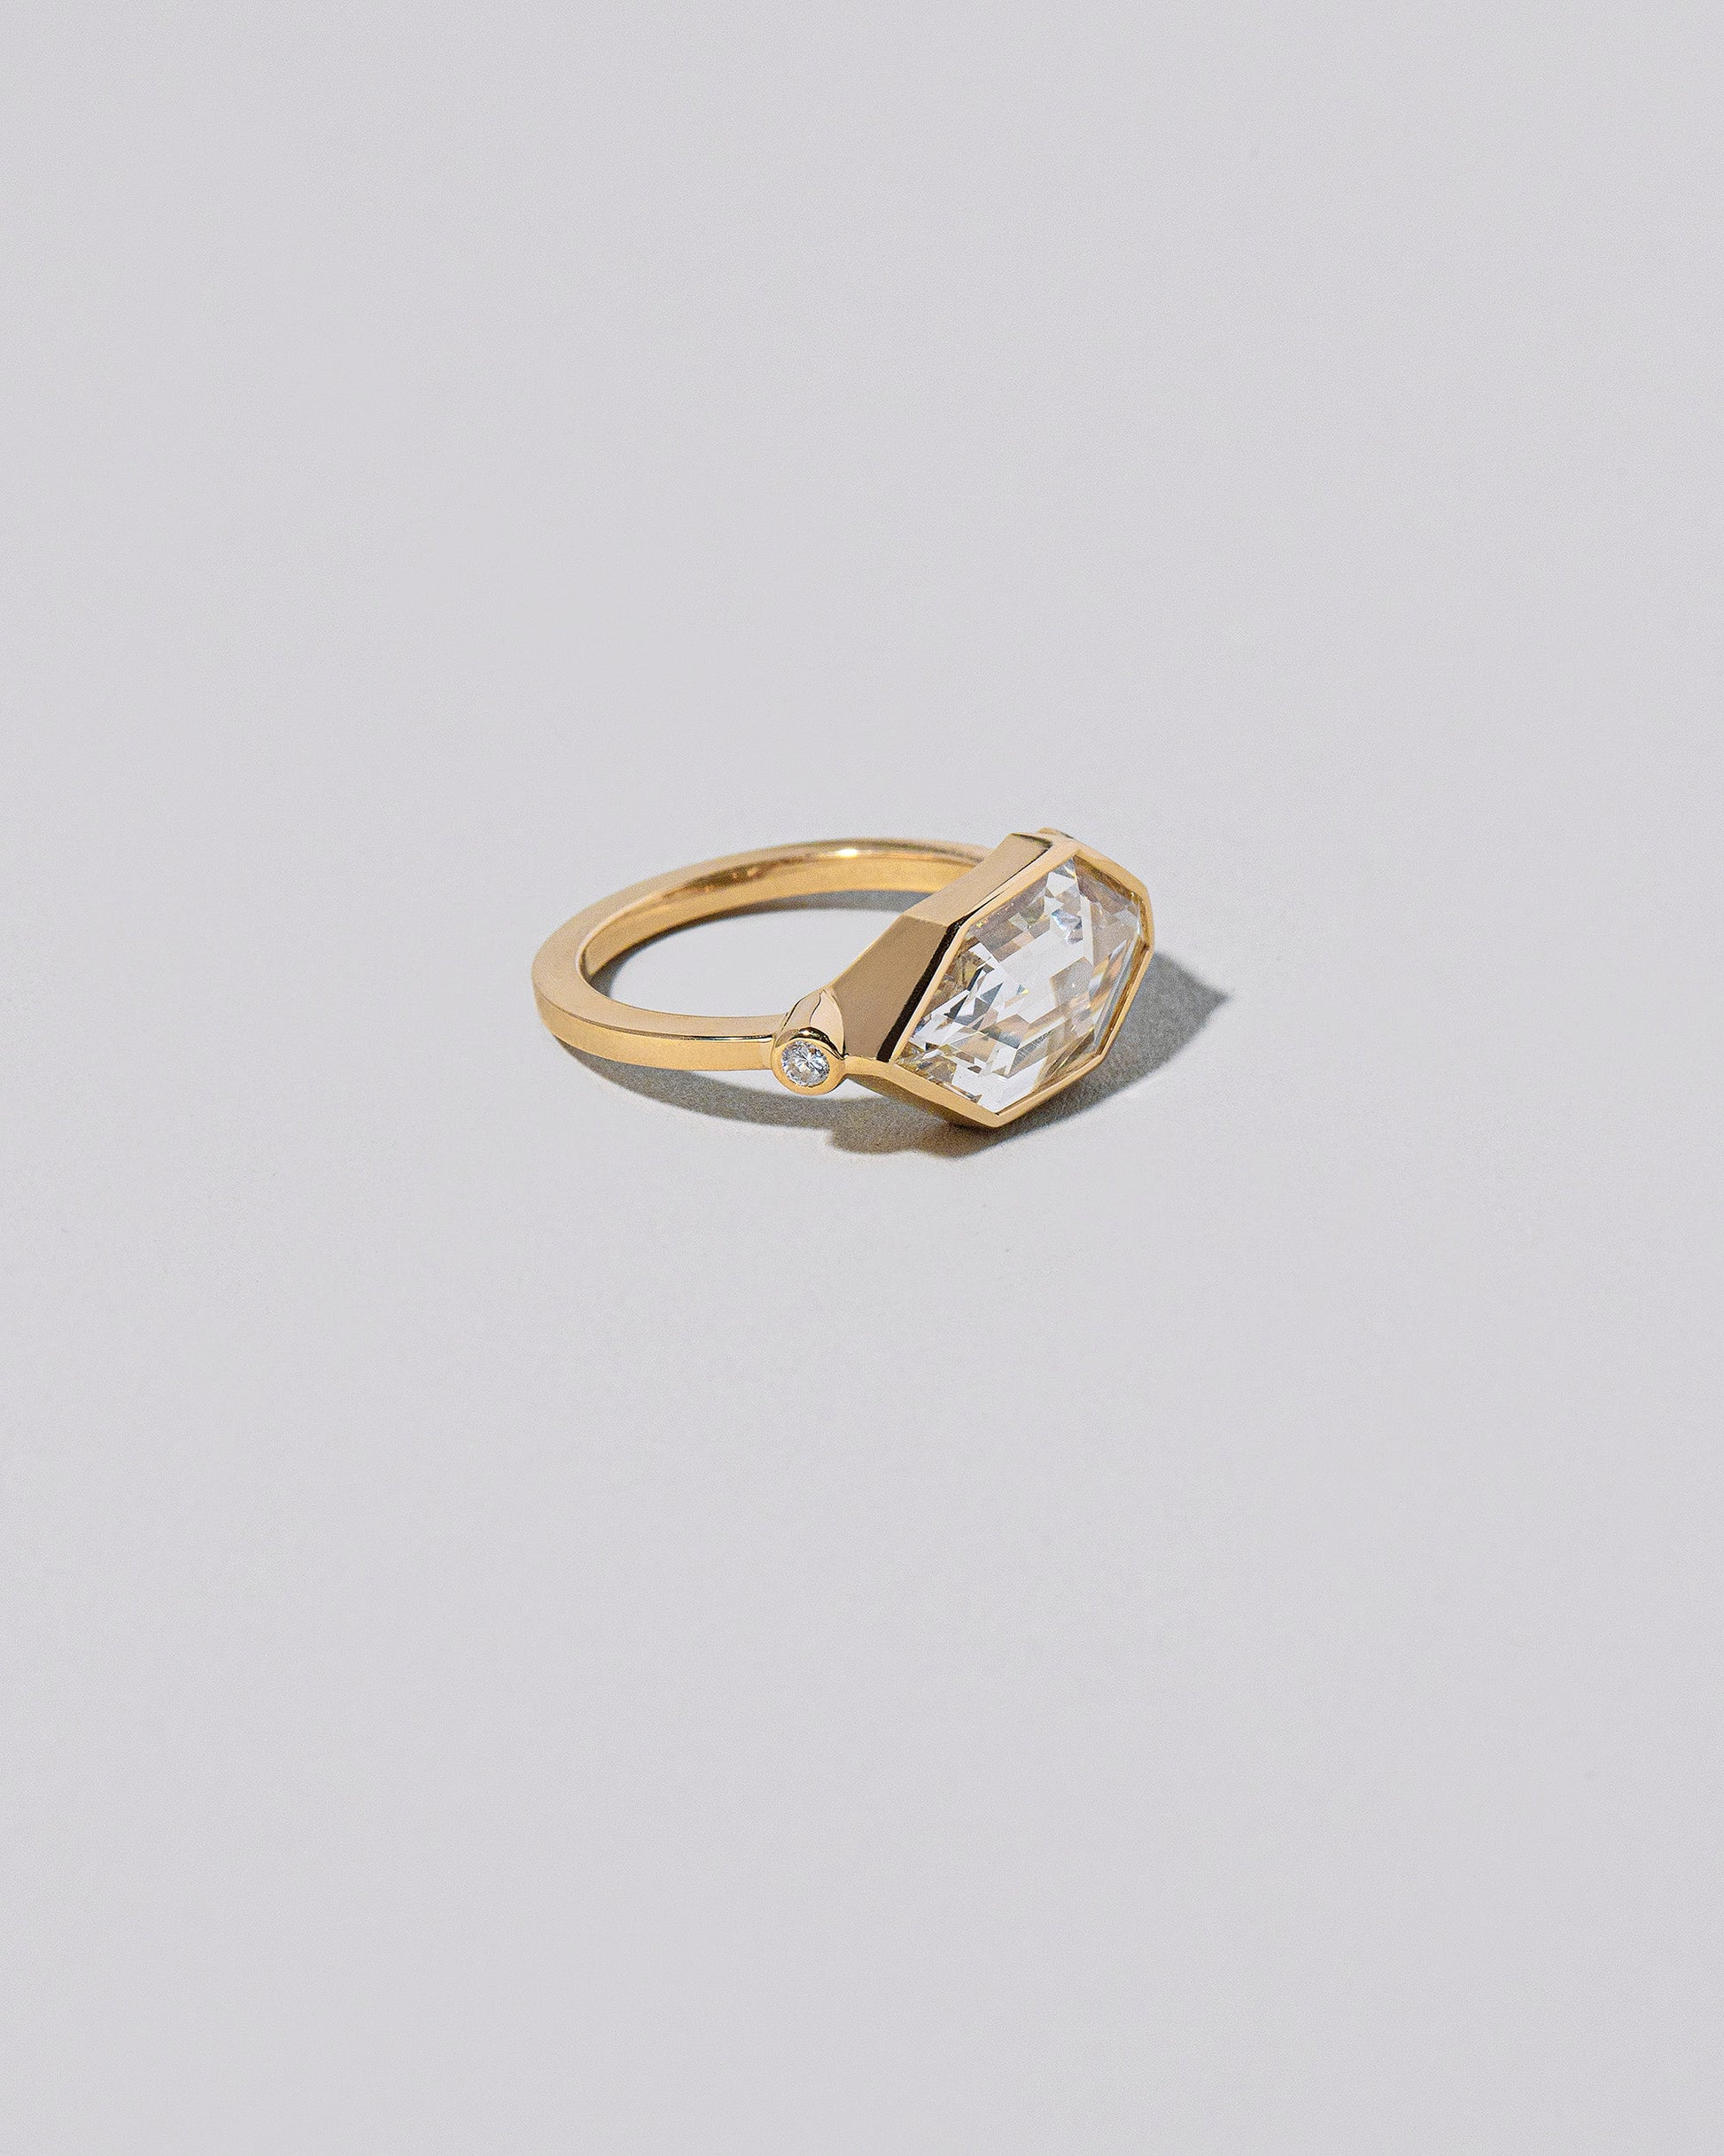  Okama Ring on light color background.